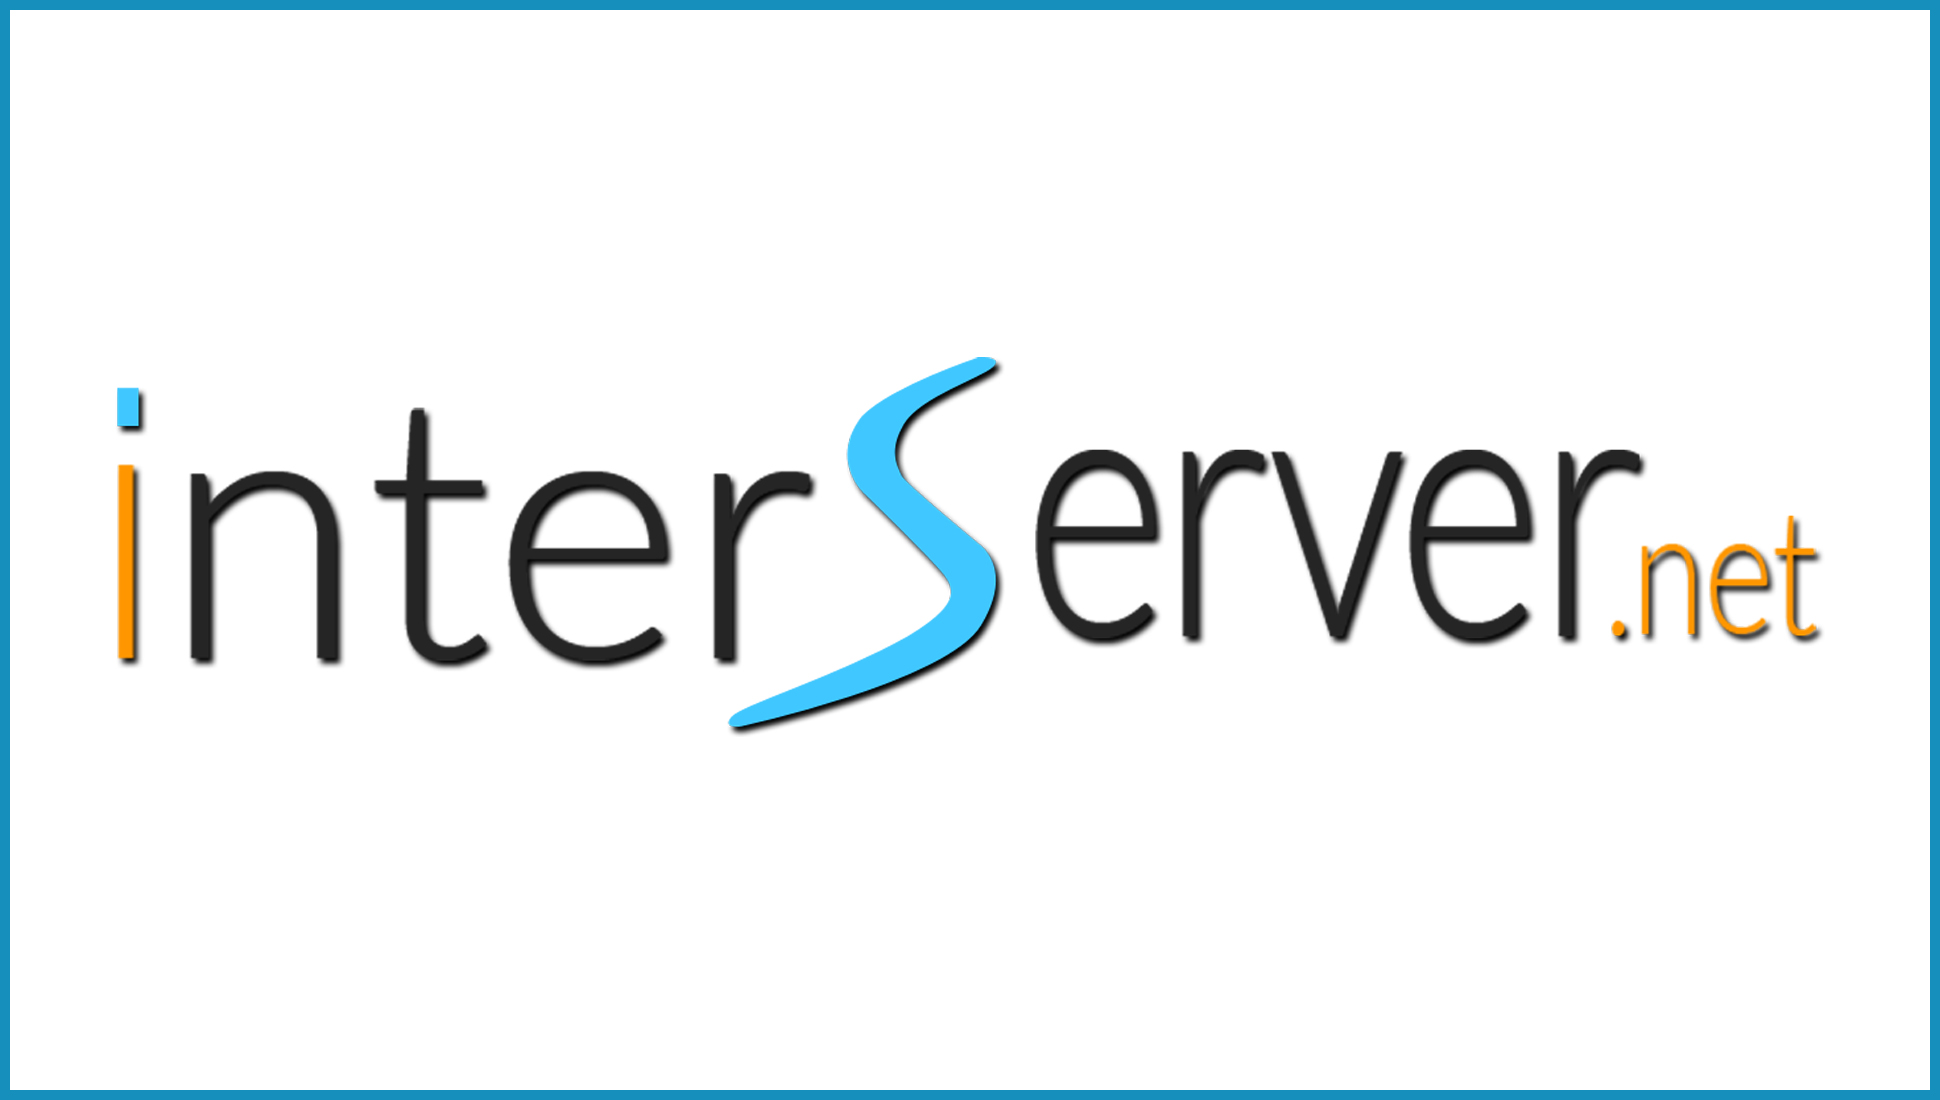 Interserver-Logo